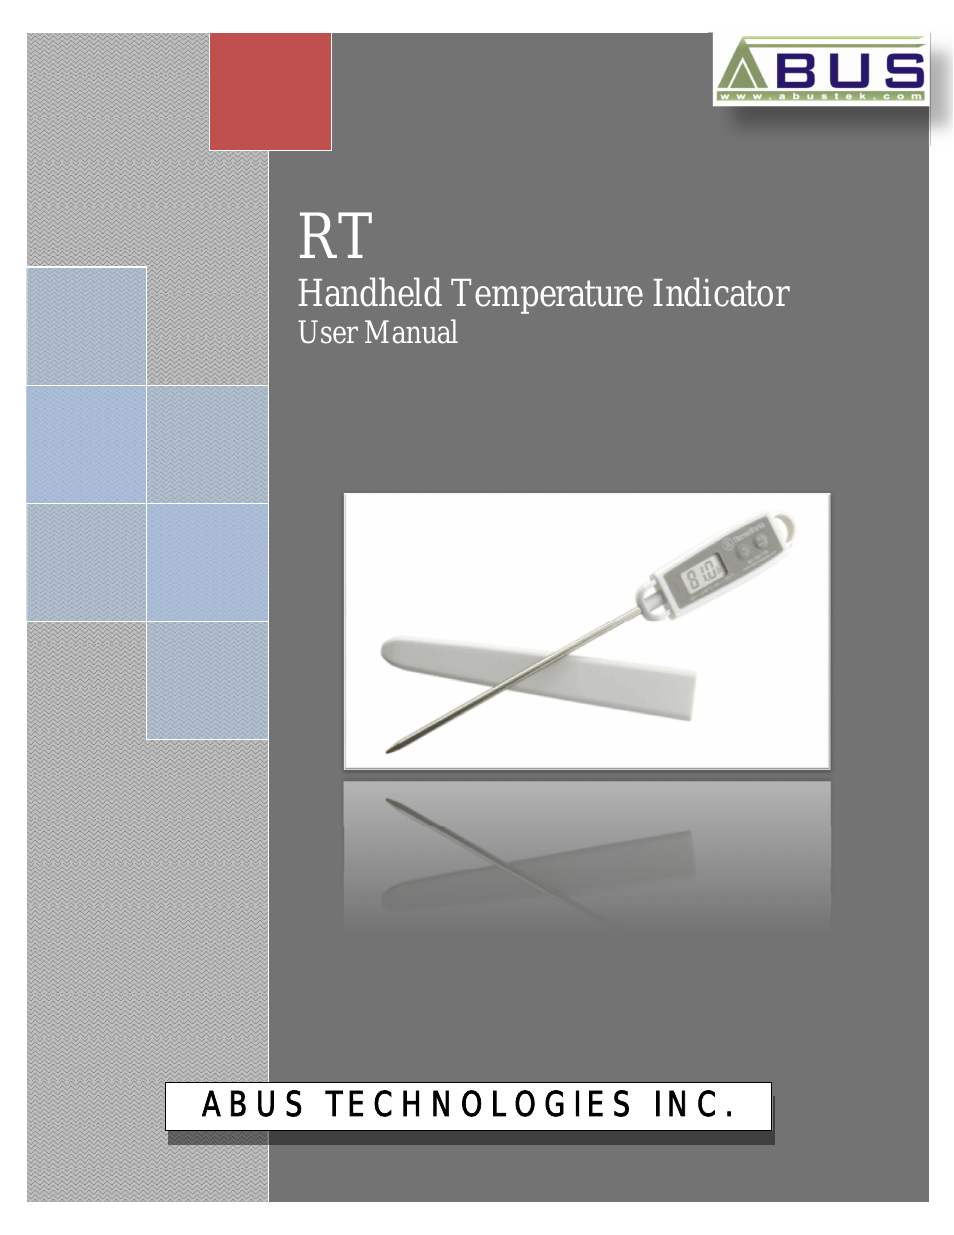 RT Handheld Temperature Indicator